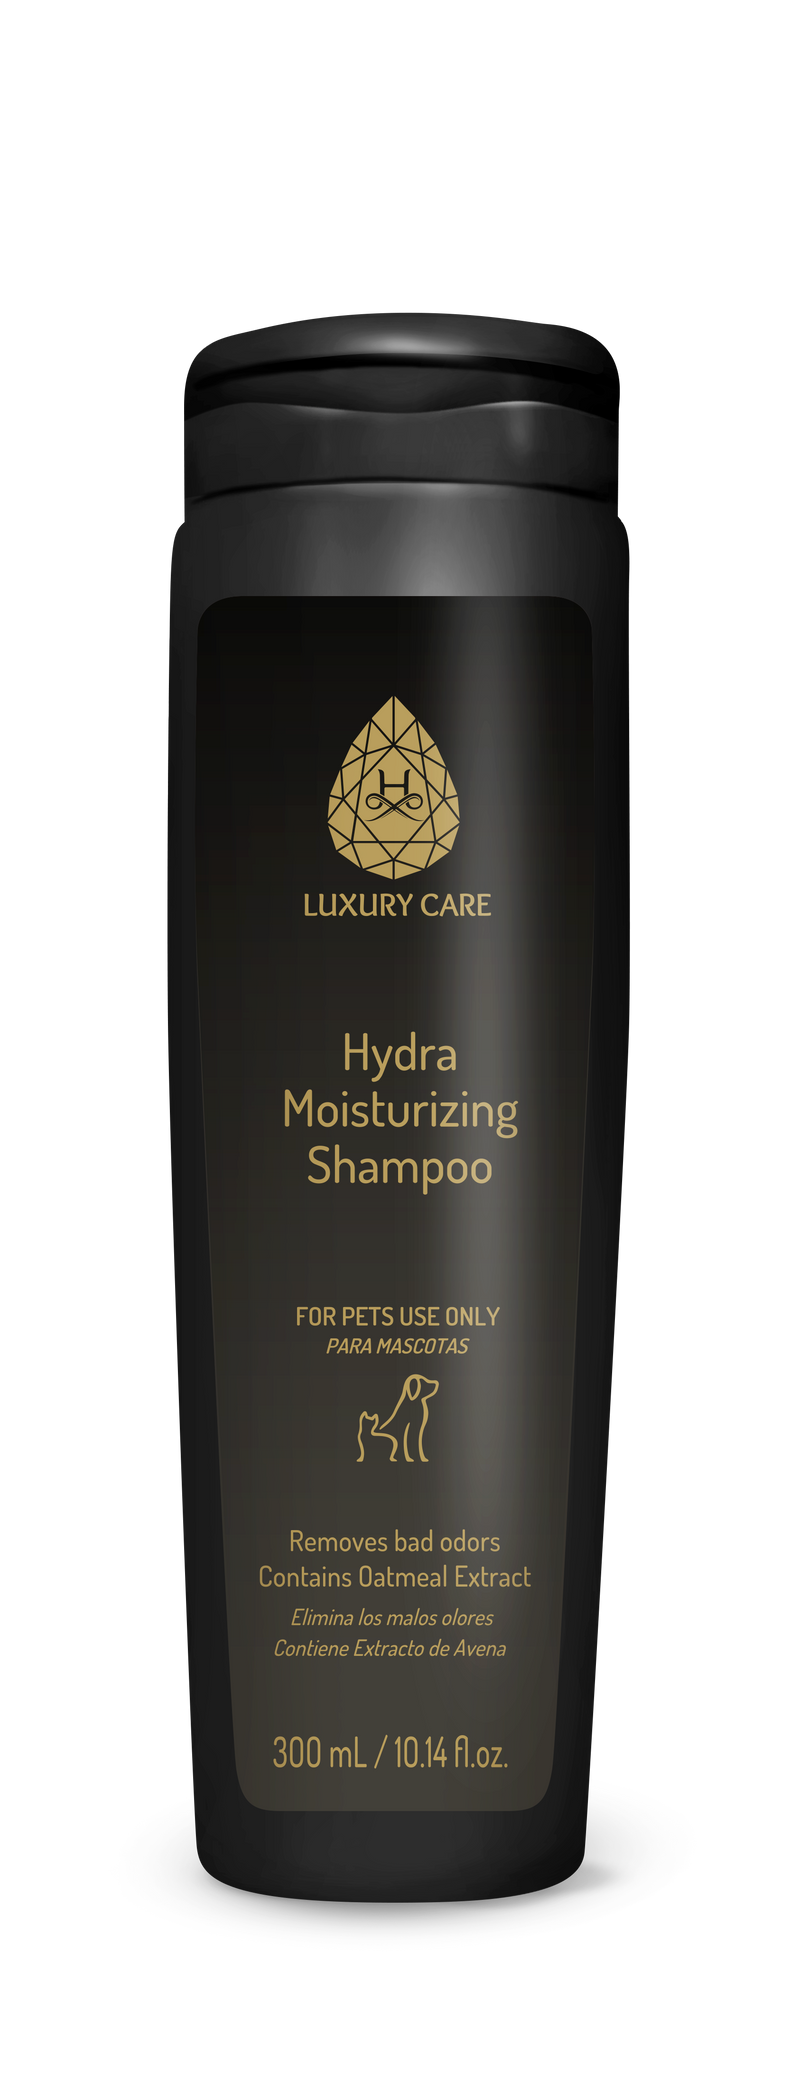 Hydra Luxury Care Moisturizing Shampoo